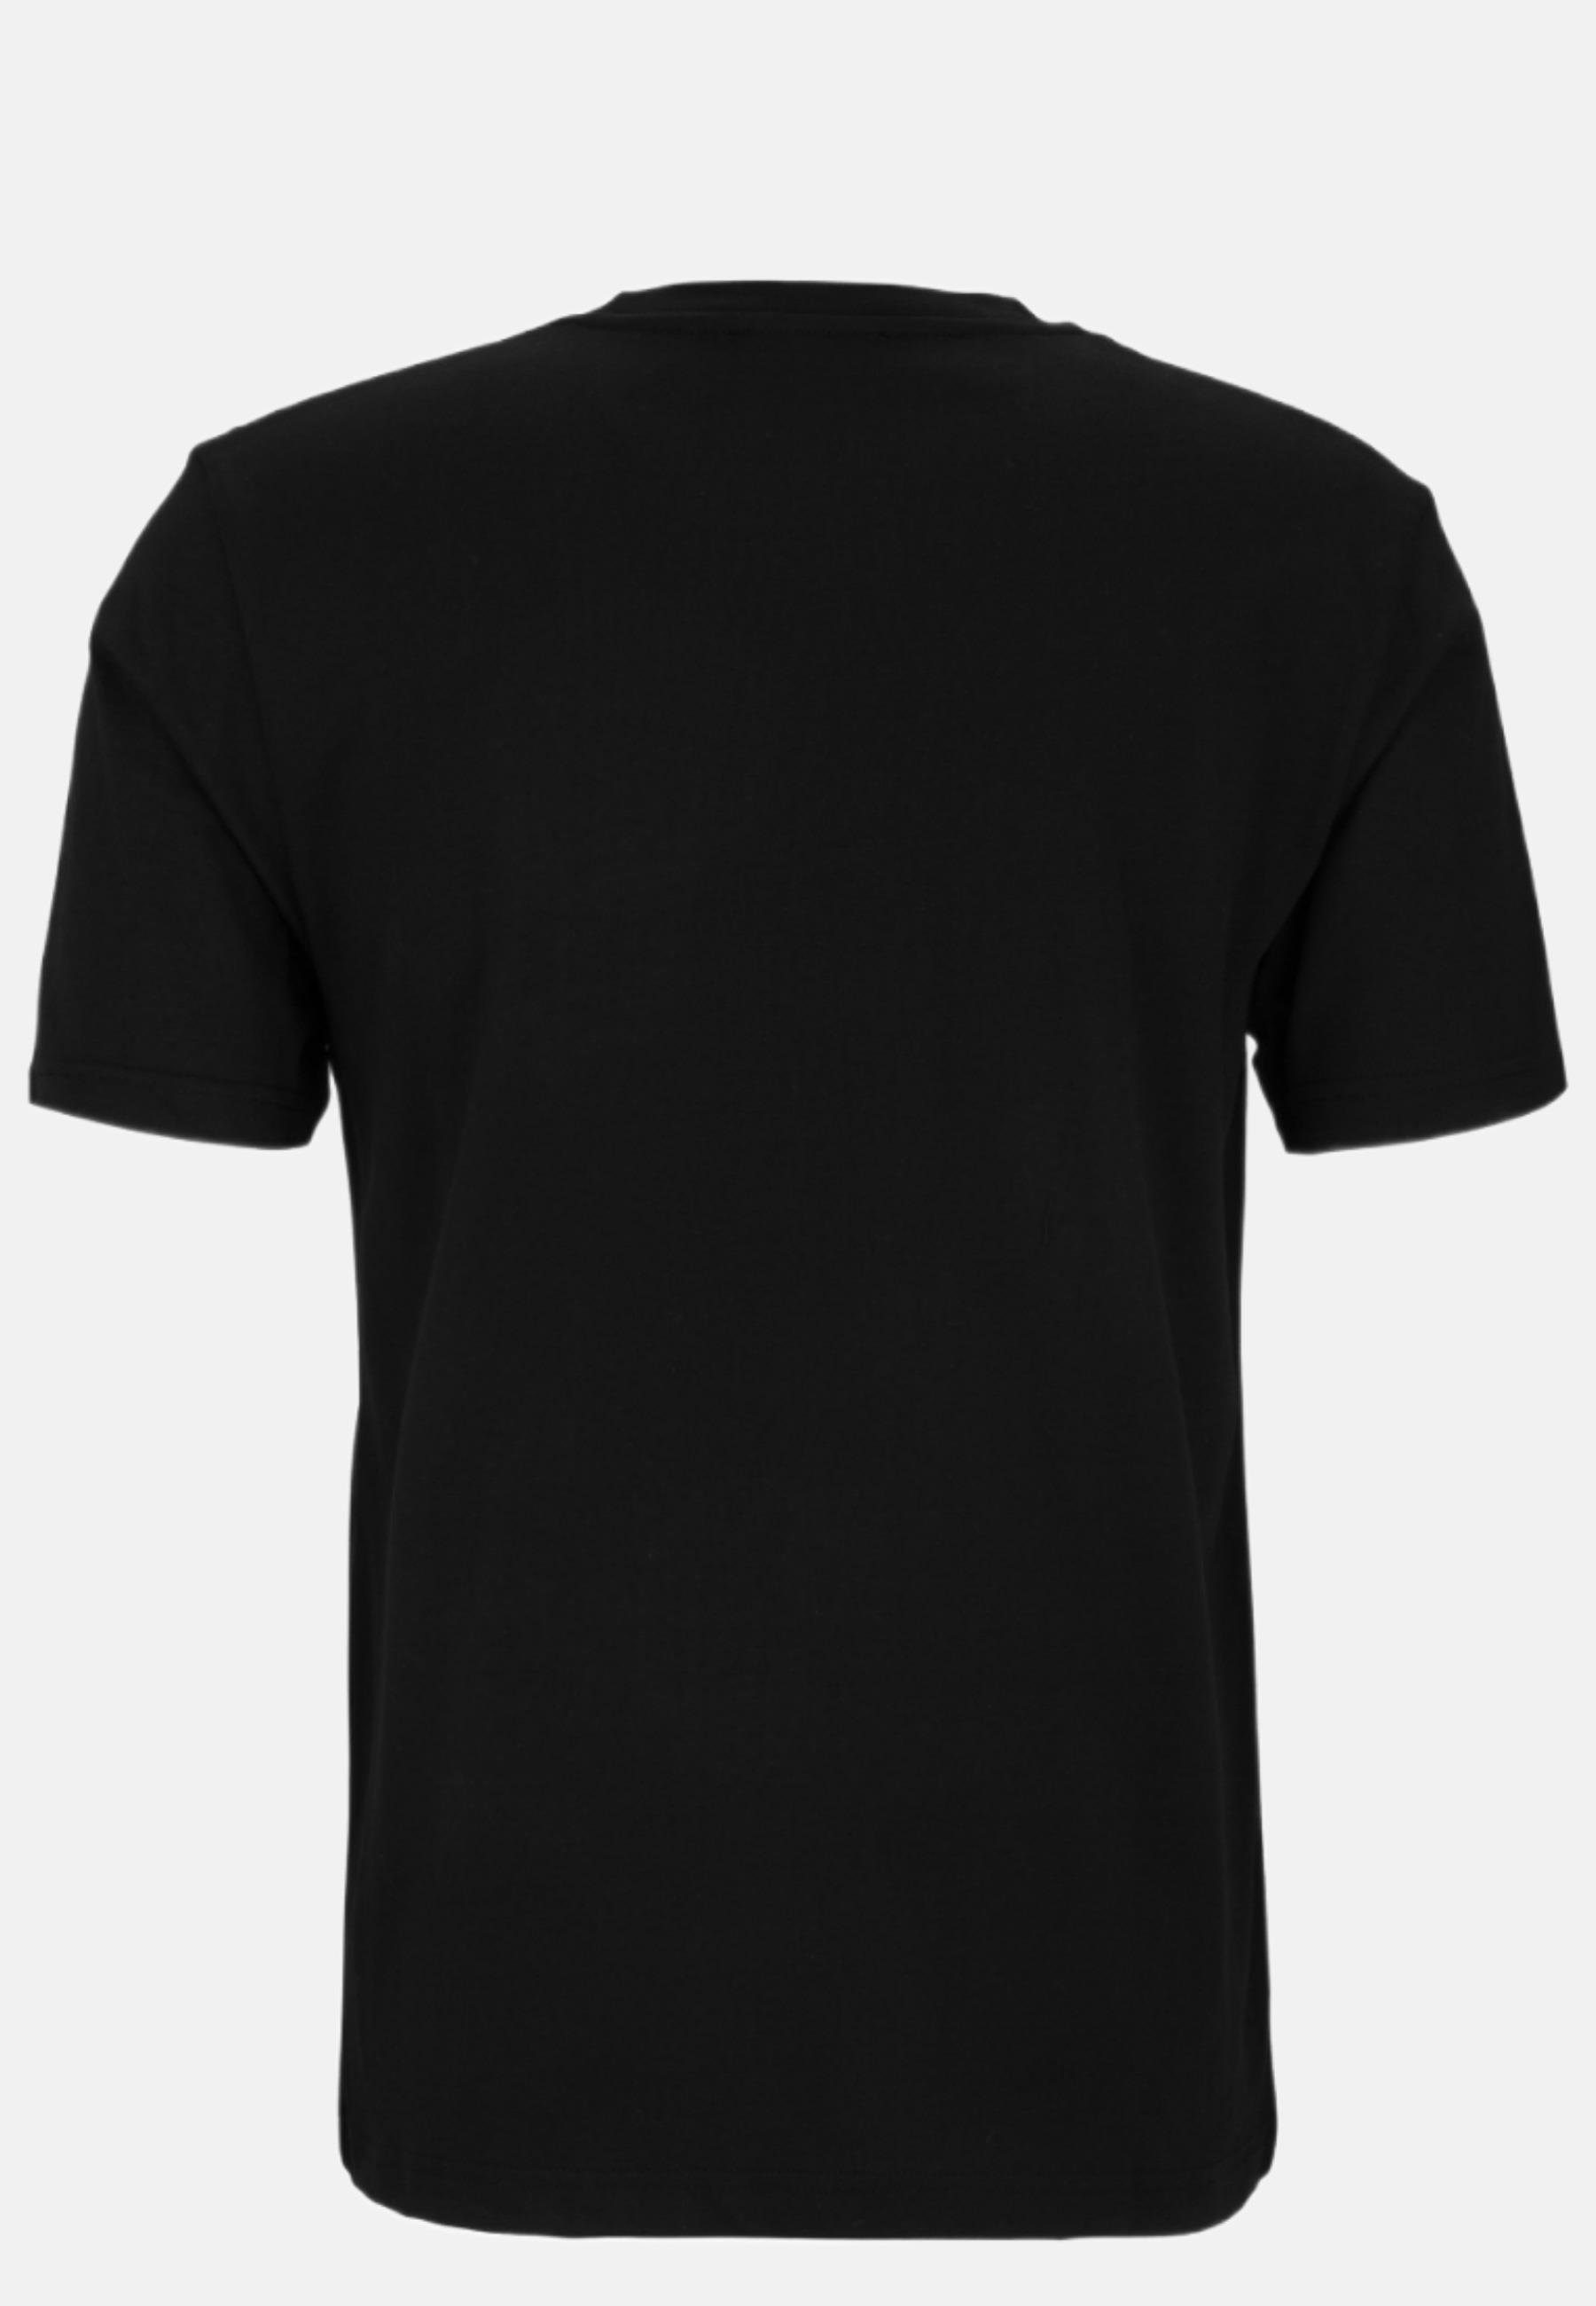 BLACK by 19V69 Italia Versace Felix T-Shirt T-Shirt